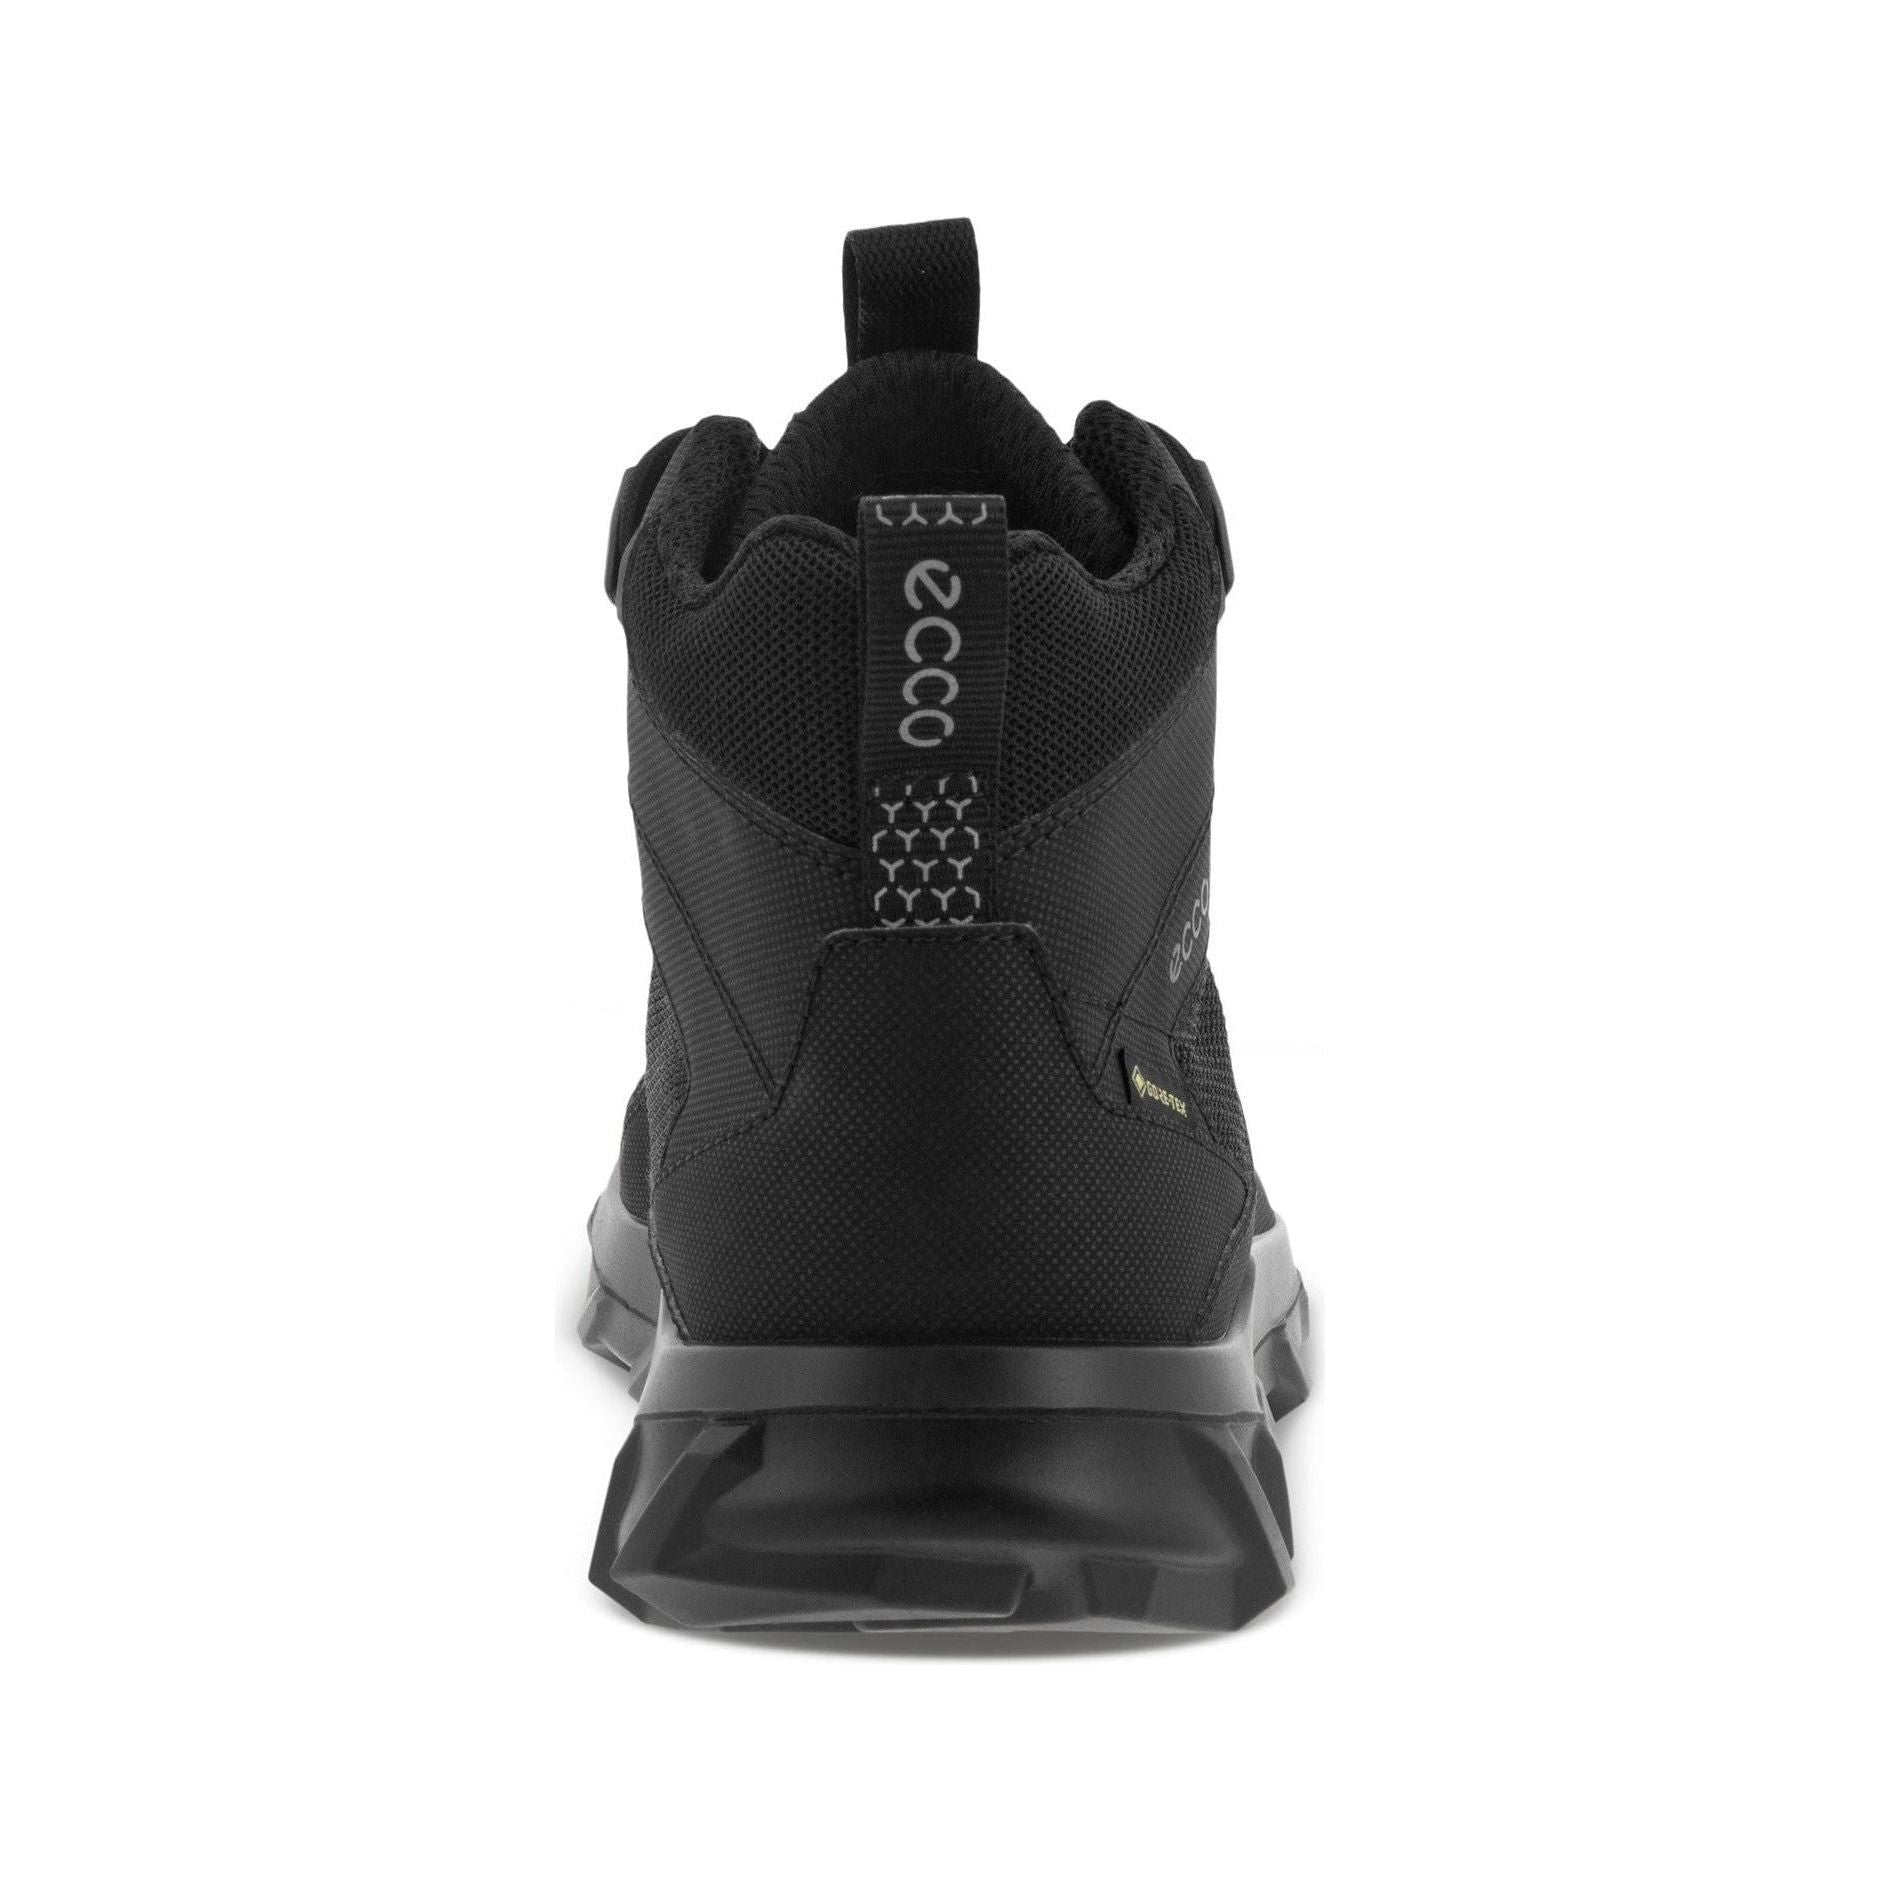 ECCO MX (820022)- Ladies Gore-Tex Lace Boot in Black. Ecco Shoes | Wisemans | Bantry | West Cork | Ireland